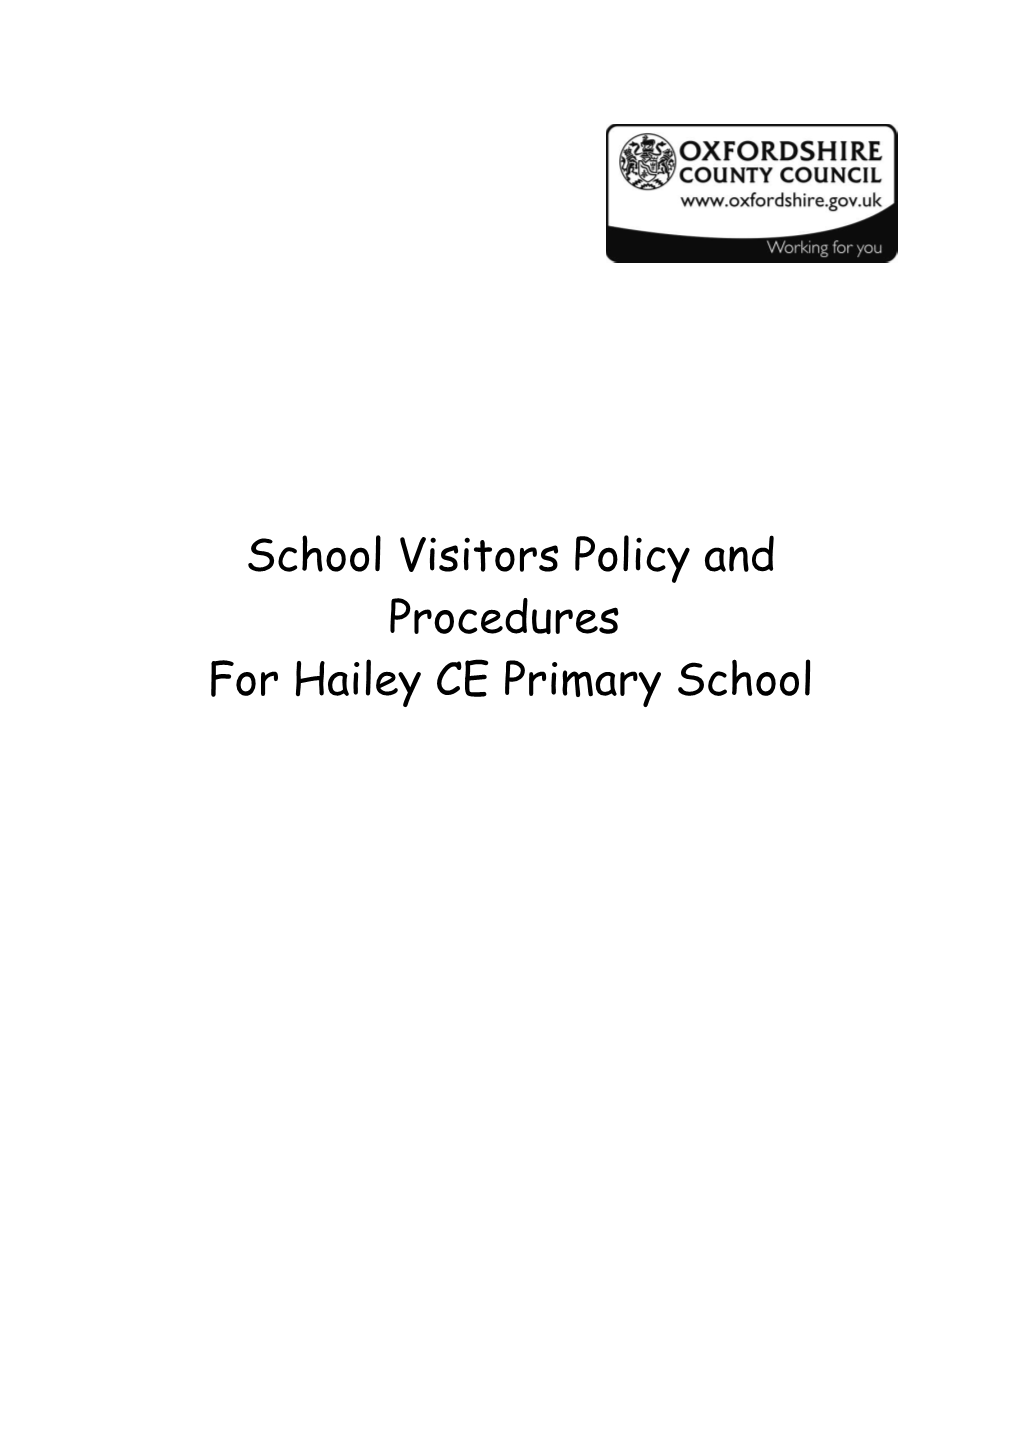 School Visitors Policy and Procedures